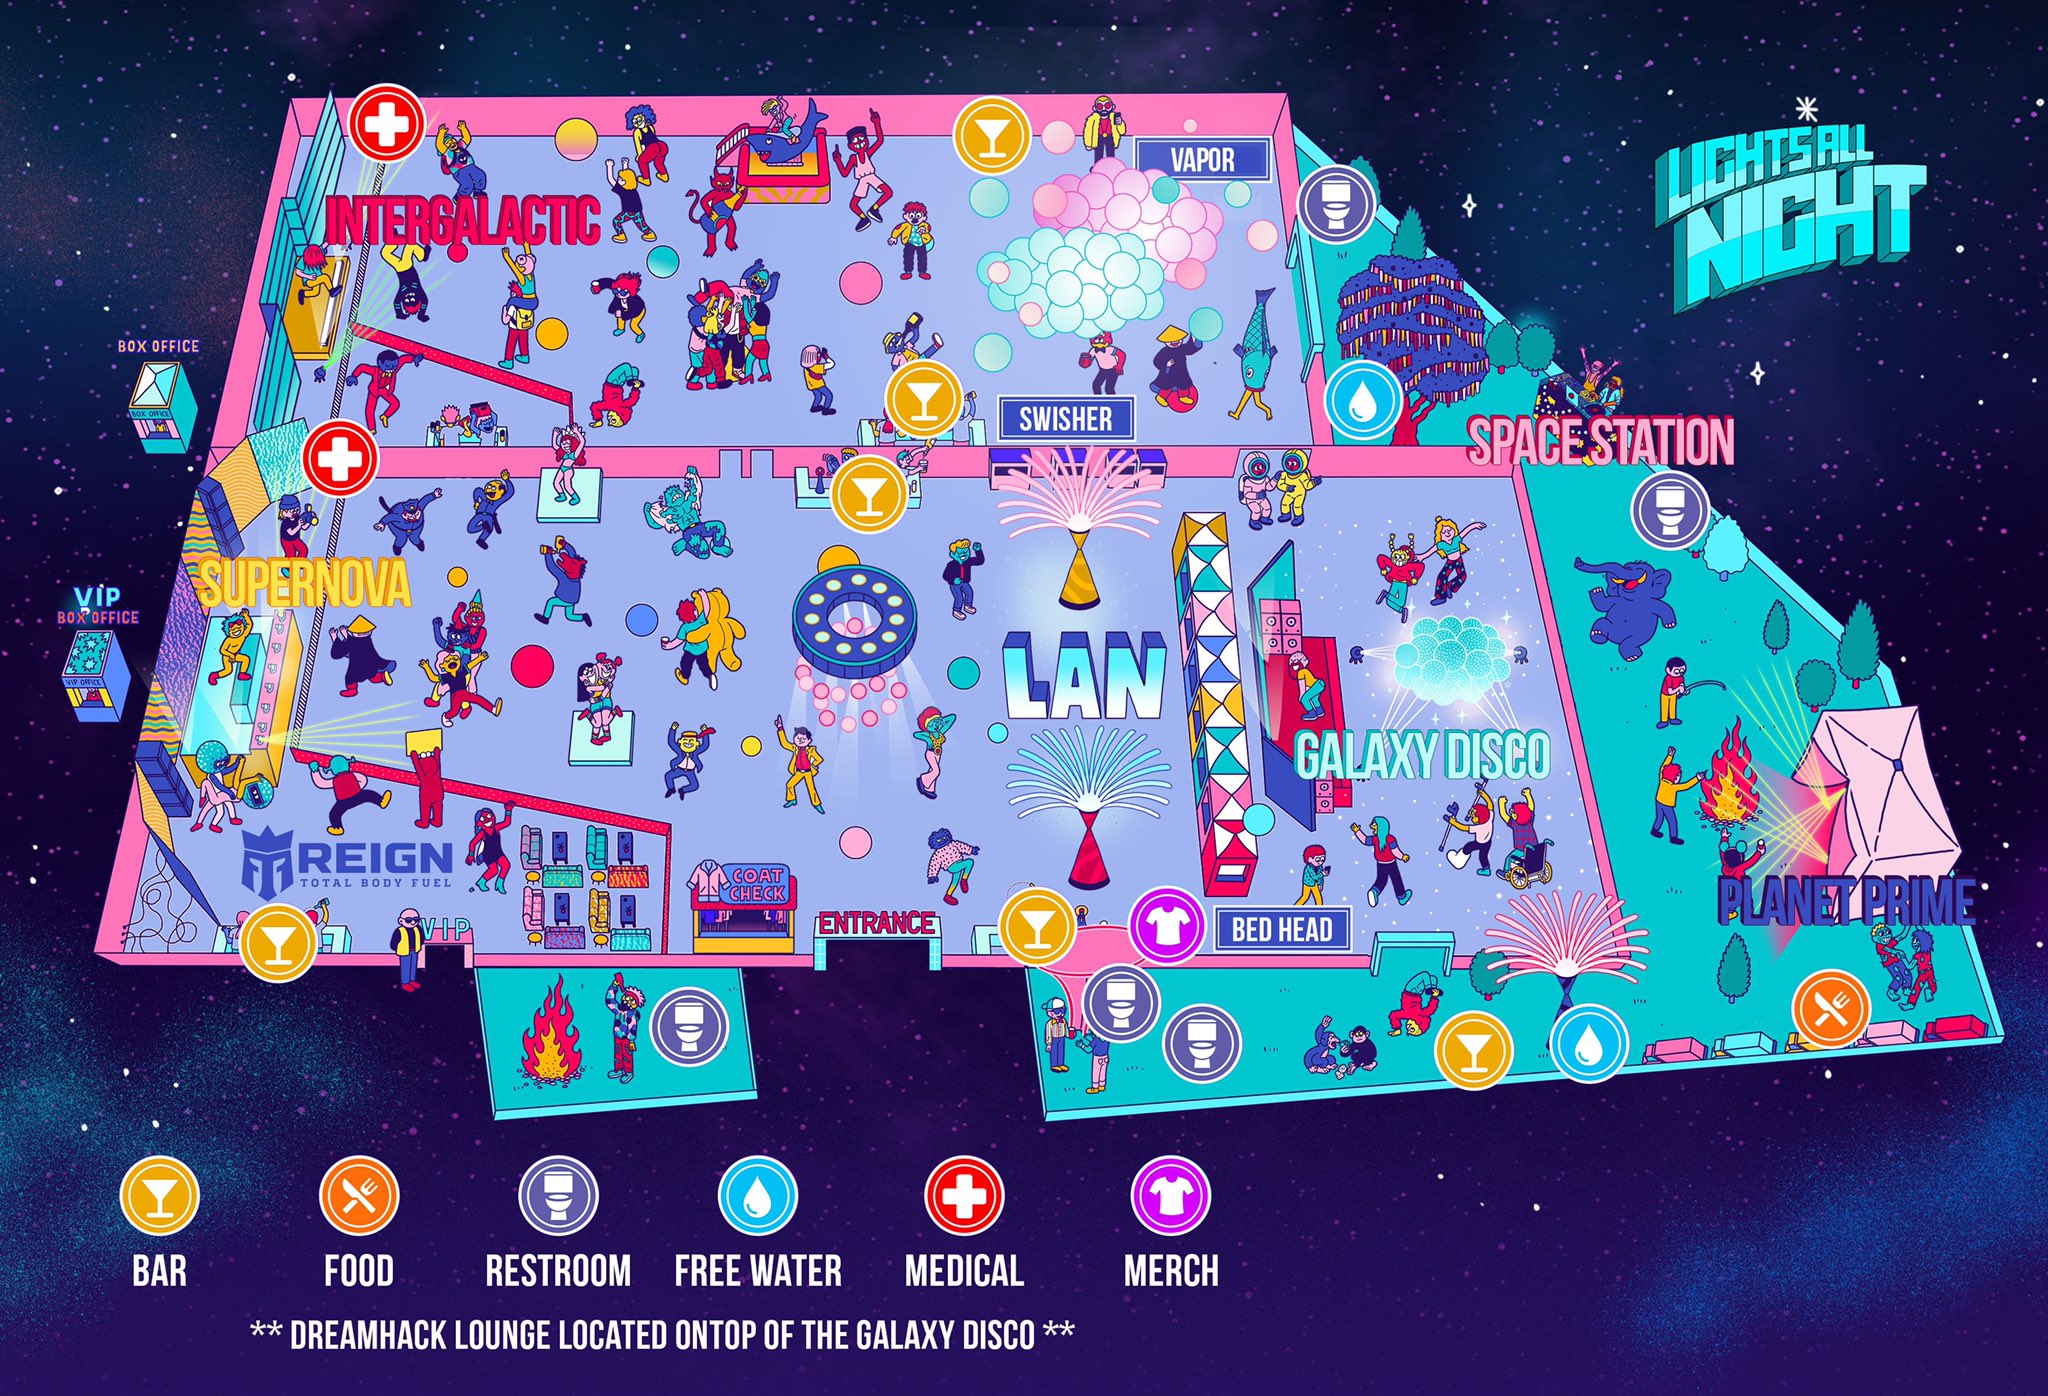 Lights All Night 2020 venue map